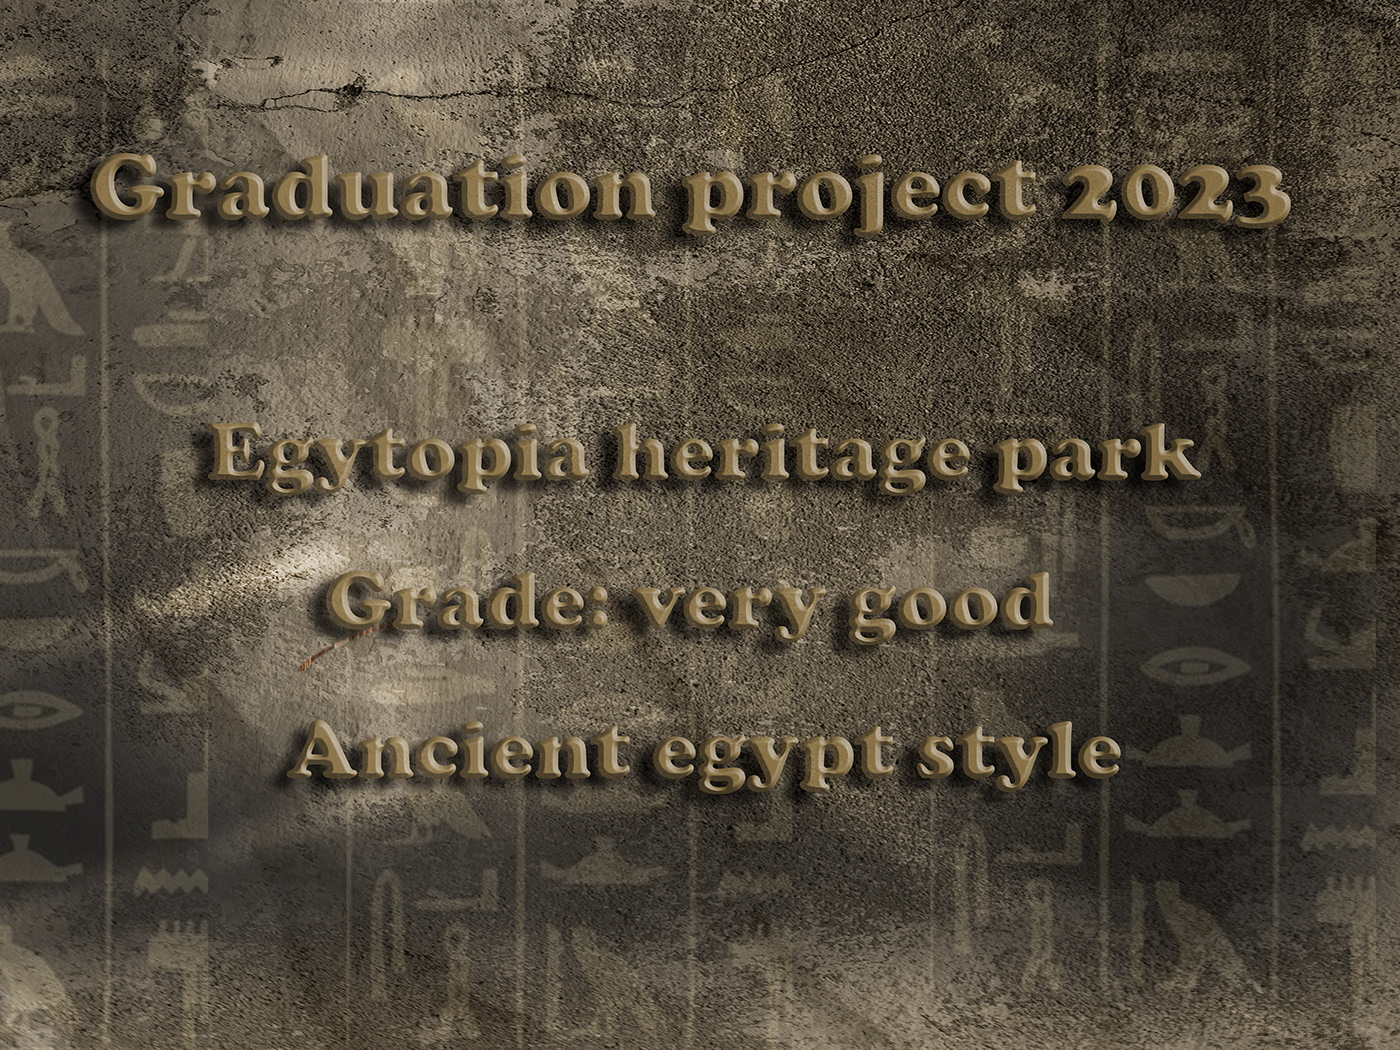 egypt egyptian ancient egypt pharaoh architecture exterior graduation project garden design Park heritage park